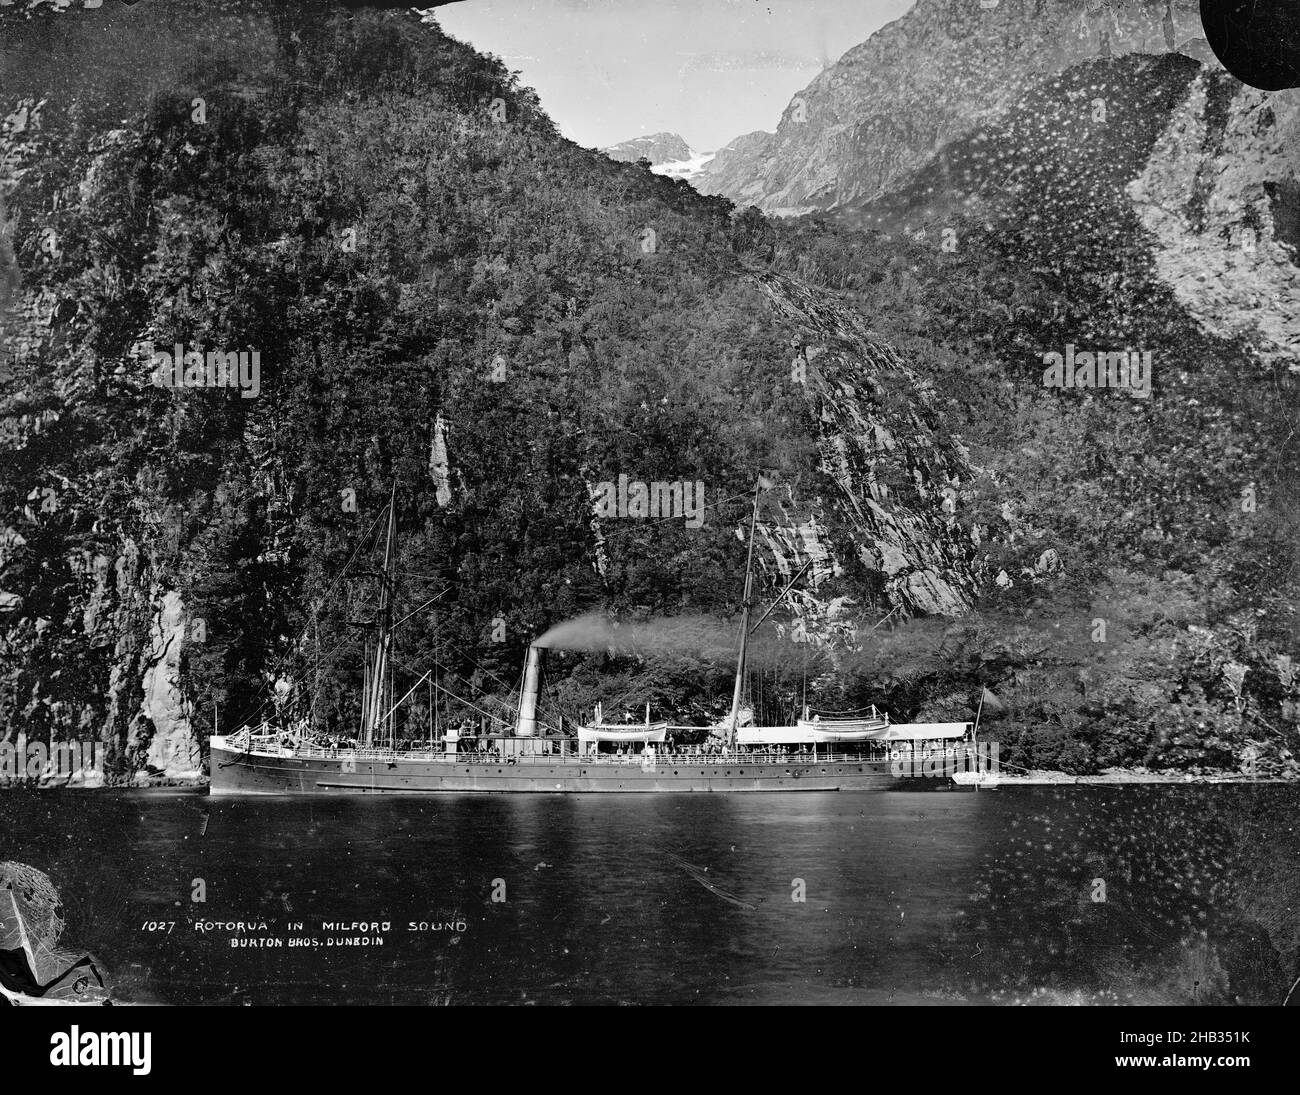 Rotorua in Milford Sound, Burton Brothers Studio, Fotostudio, 1879, Dunedin, Schwarz-Weiß-Fotografie, Boat ist Rotorua von Union Steam Ship Co Stockfoto